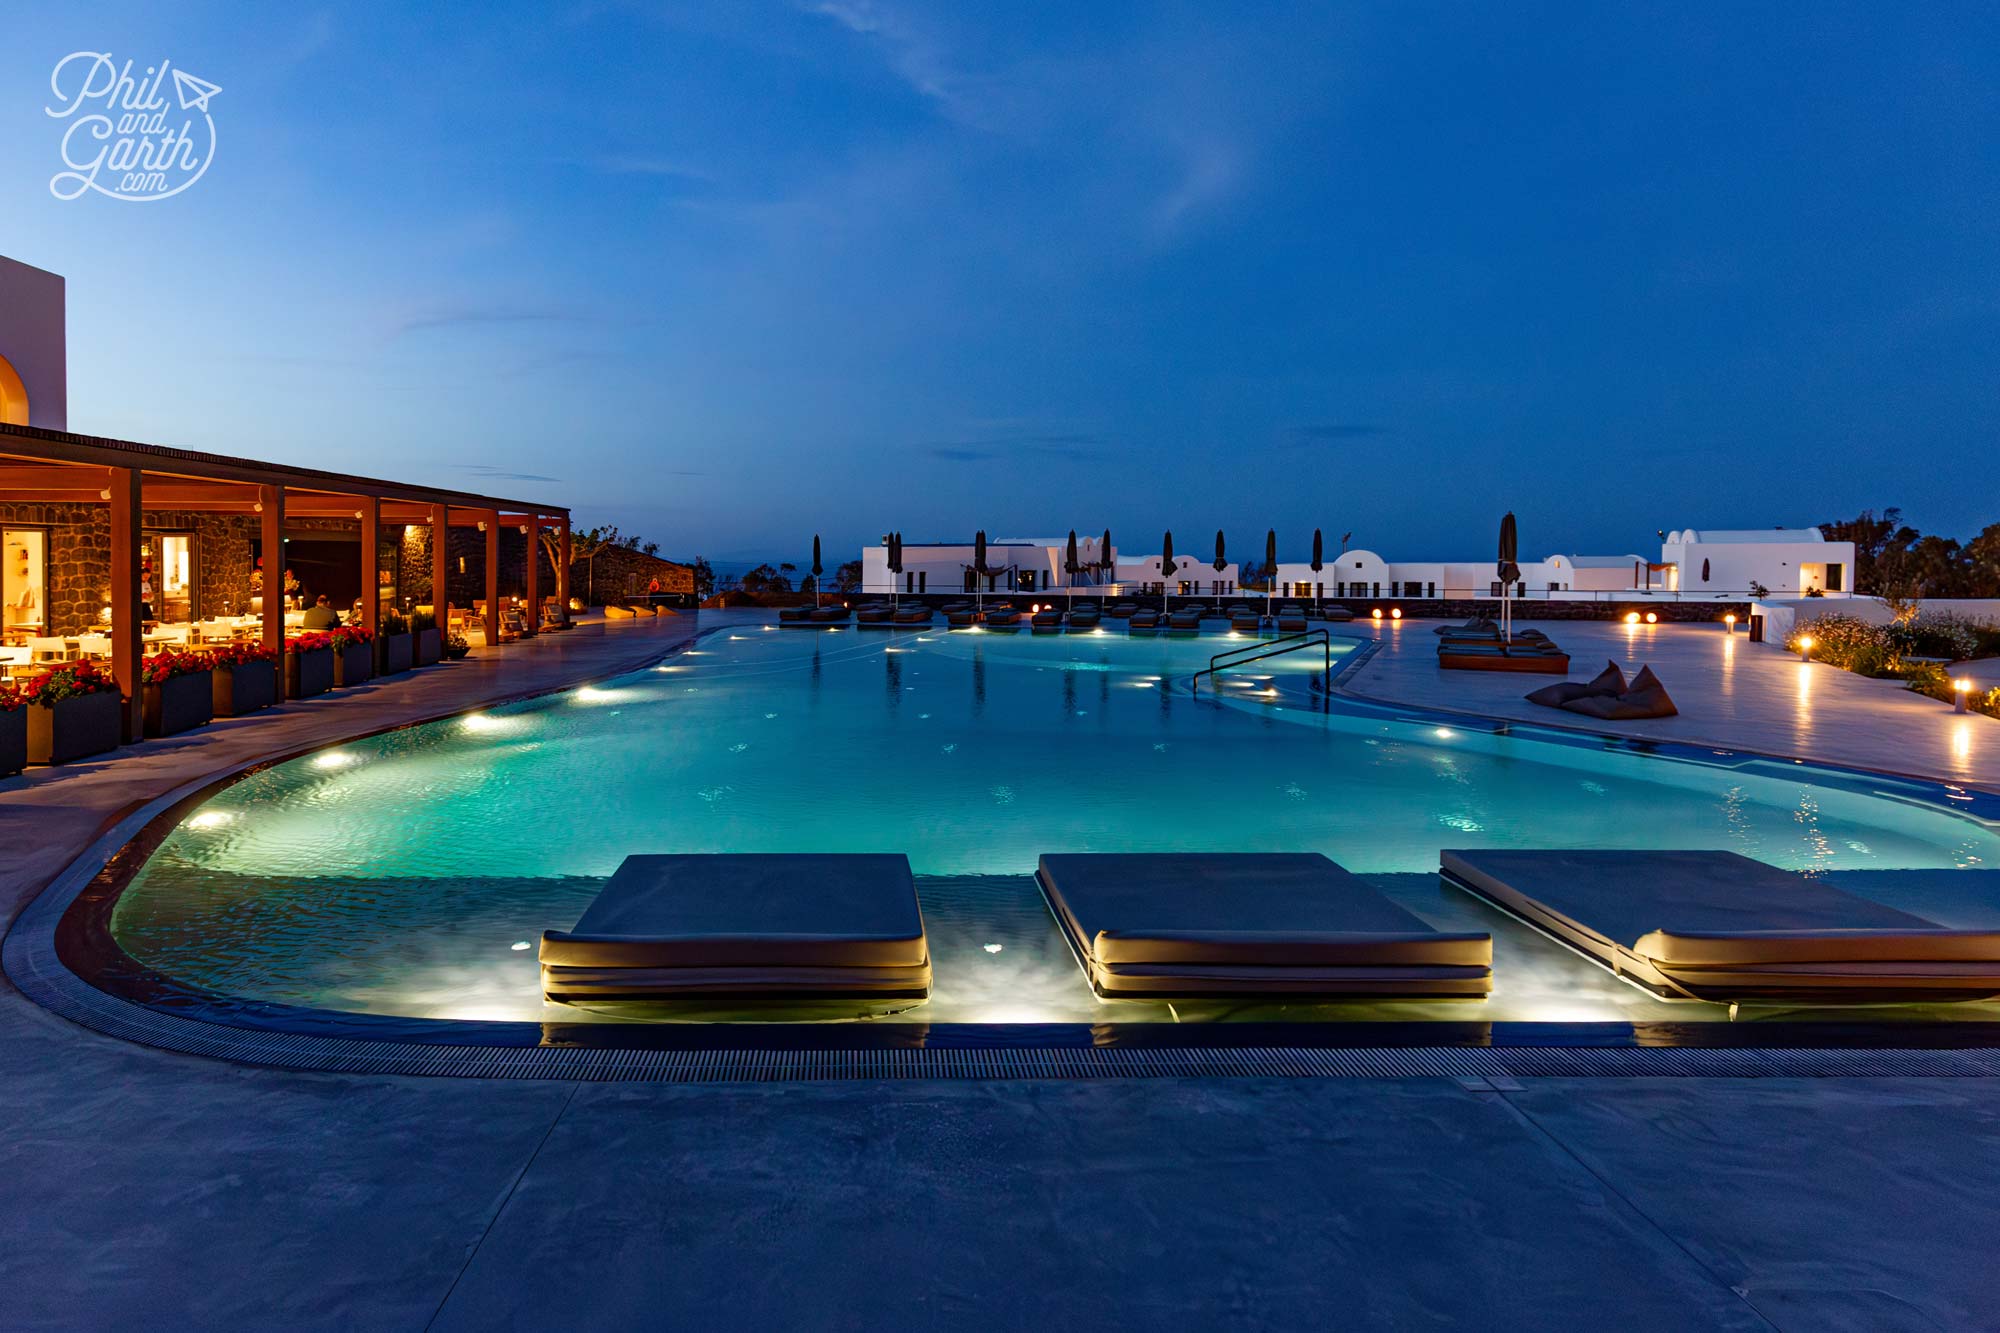 Orama's pool look so elegant at night